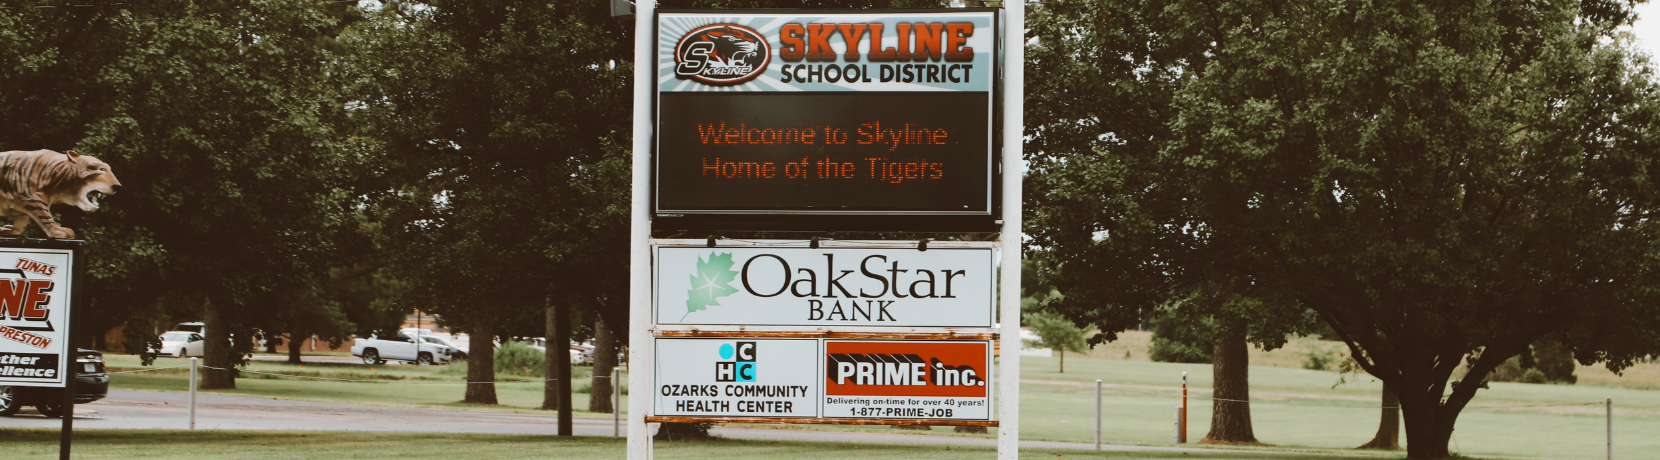 Skyline Highschool sign with OakStar logo